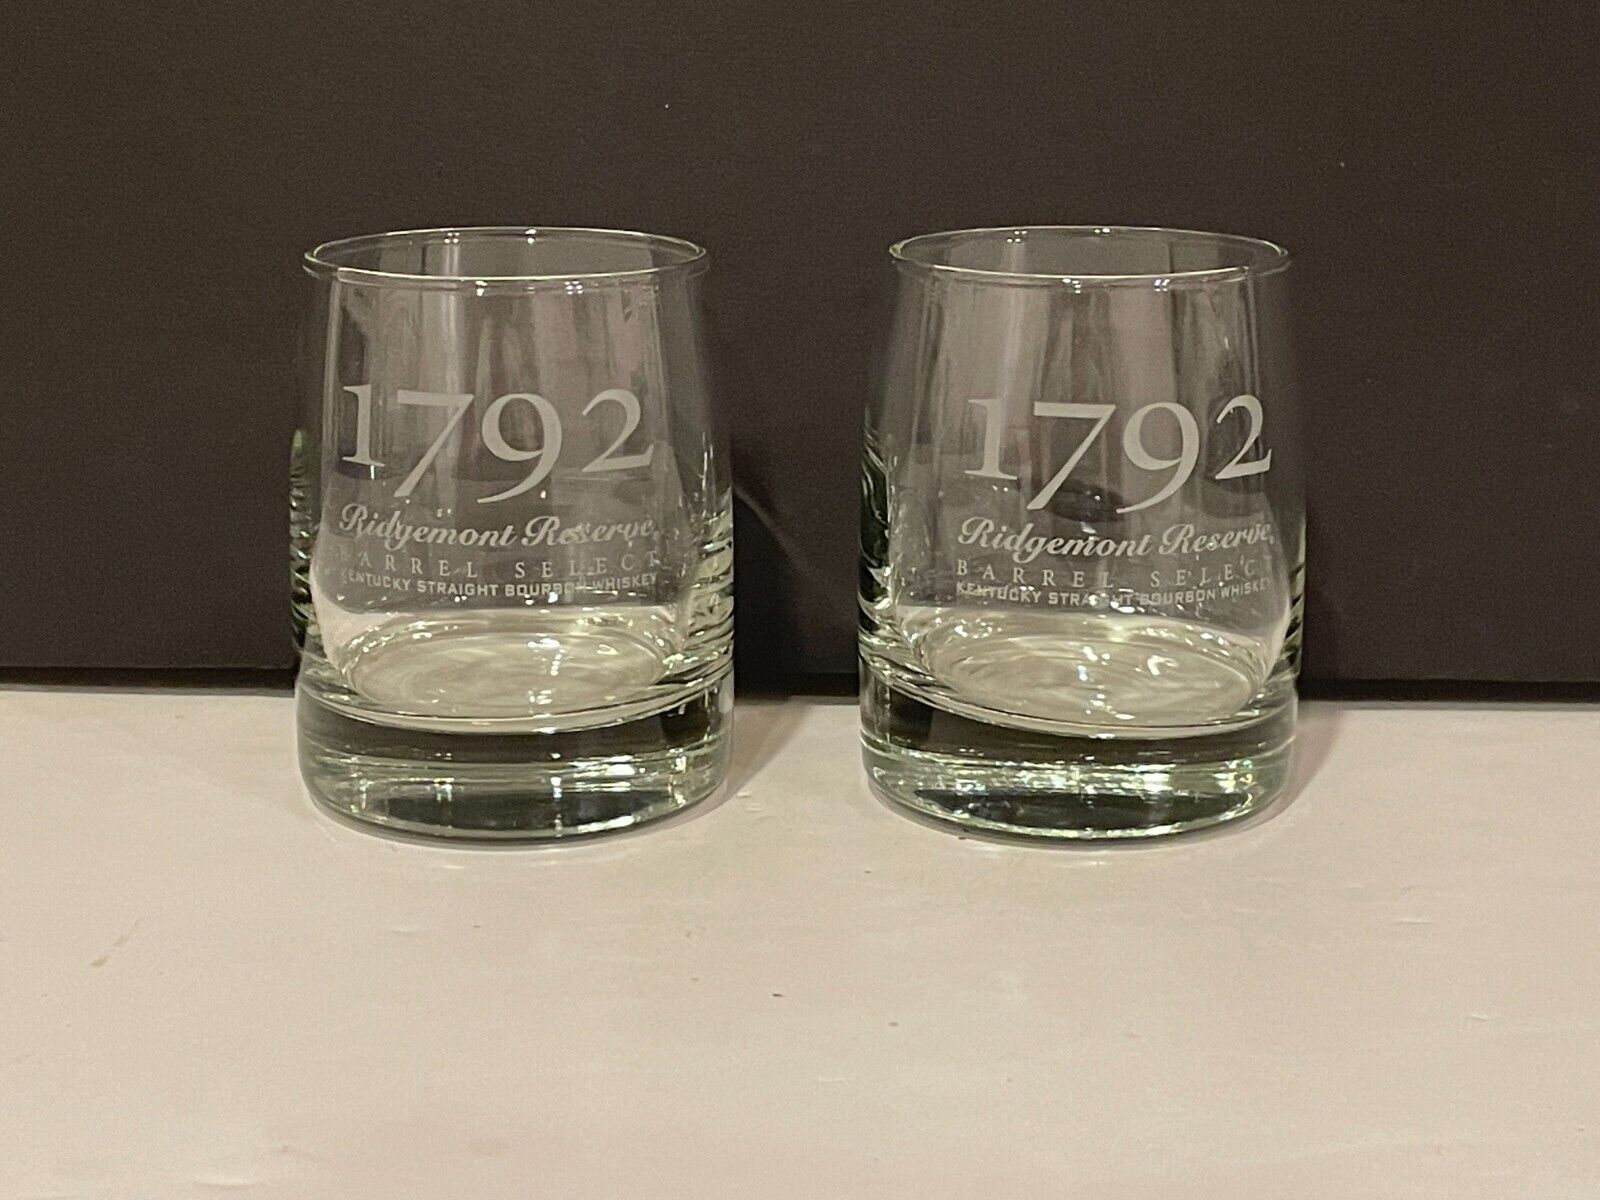 Two (2) Ridgemont Reserve 1792 Bourbon Whiskey Rocks Glasses